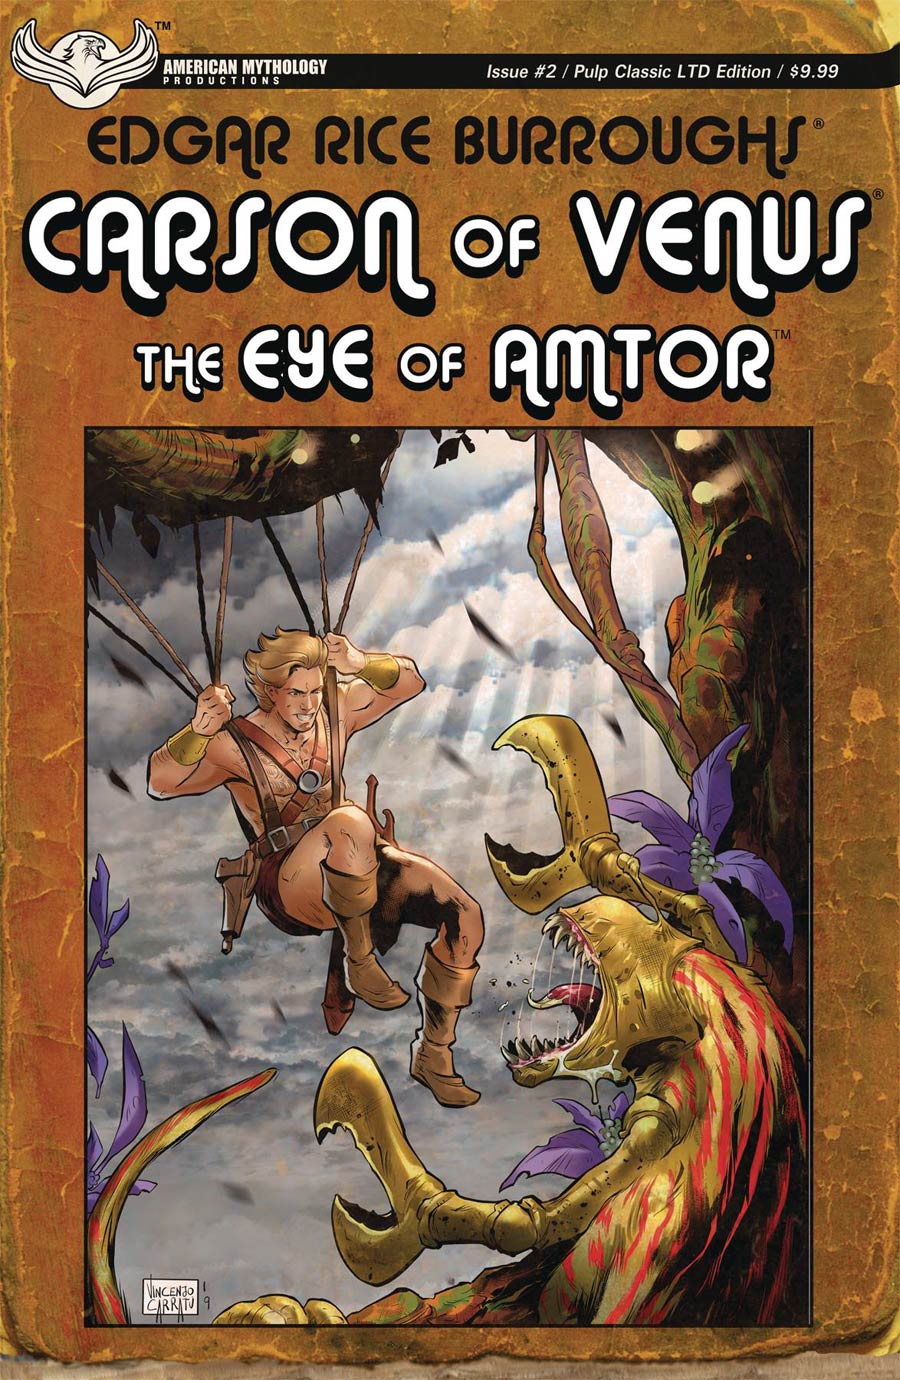 Carson Of Venus Eye Of Amtor #2 Cover B Limited Edition Vincenzo Carratu Pulp Cover